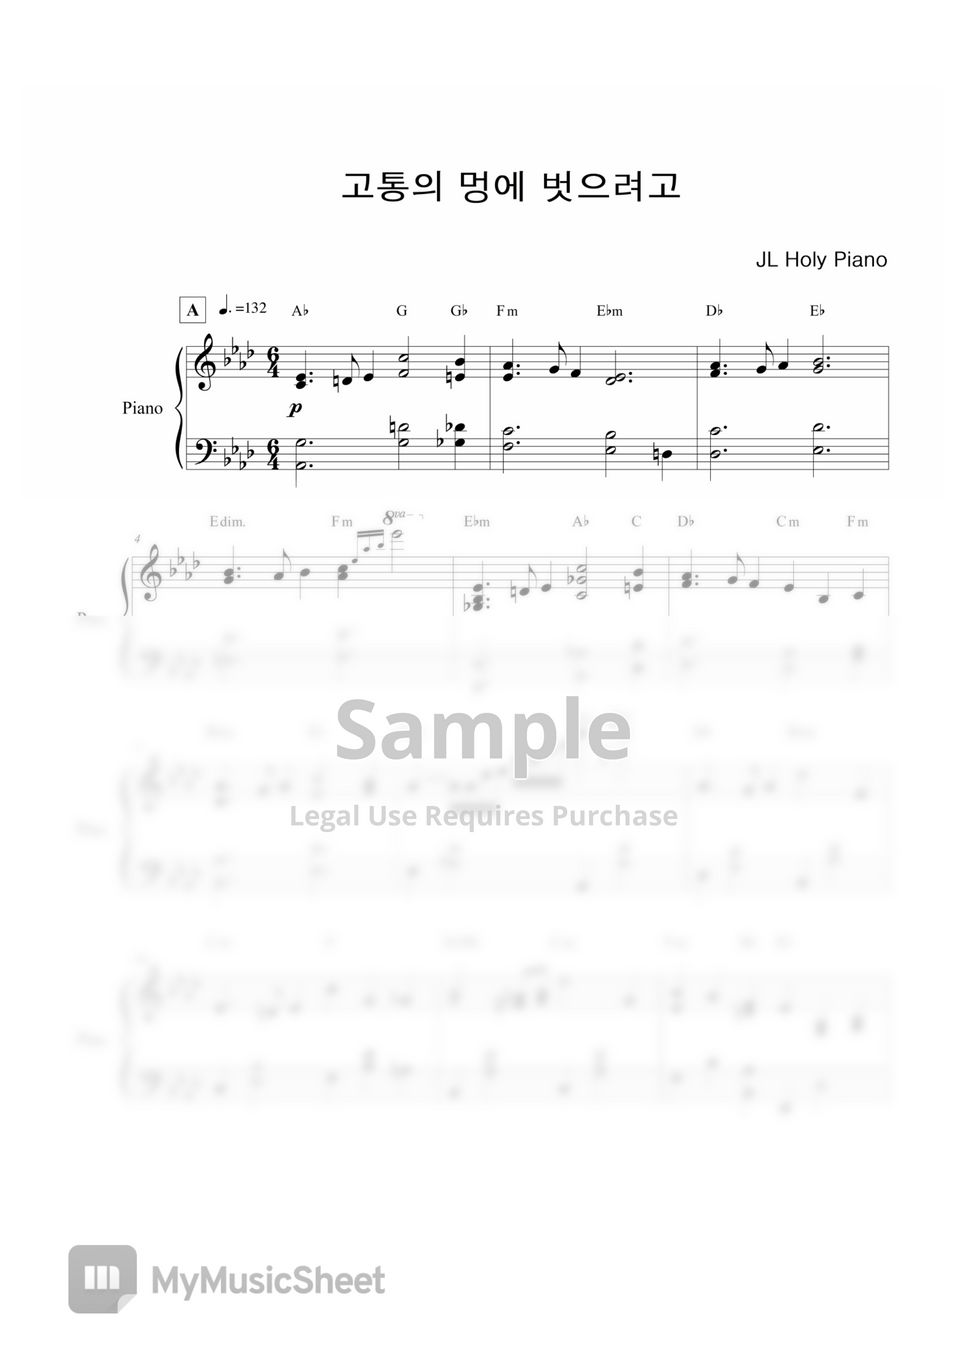 JL Holy Piano - 고통의 멍에 벗으려고 by JL Holy Piano